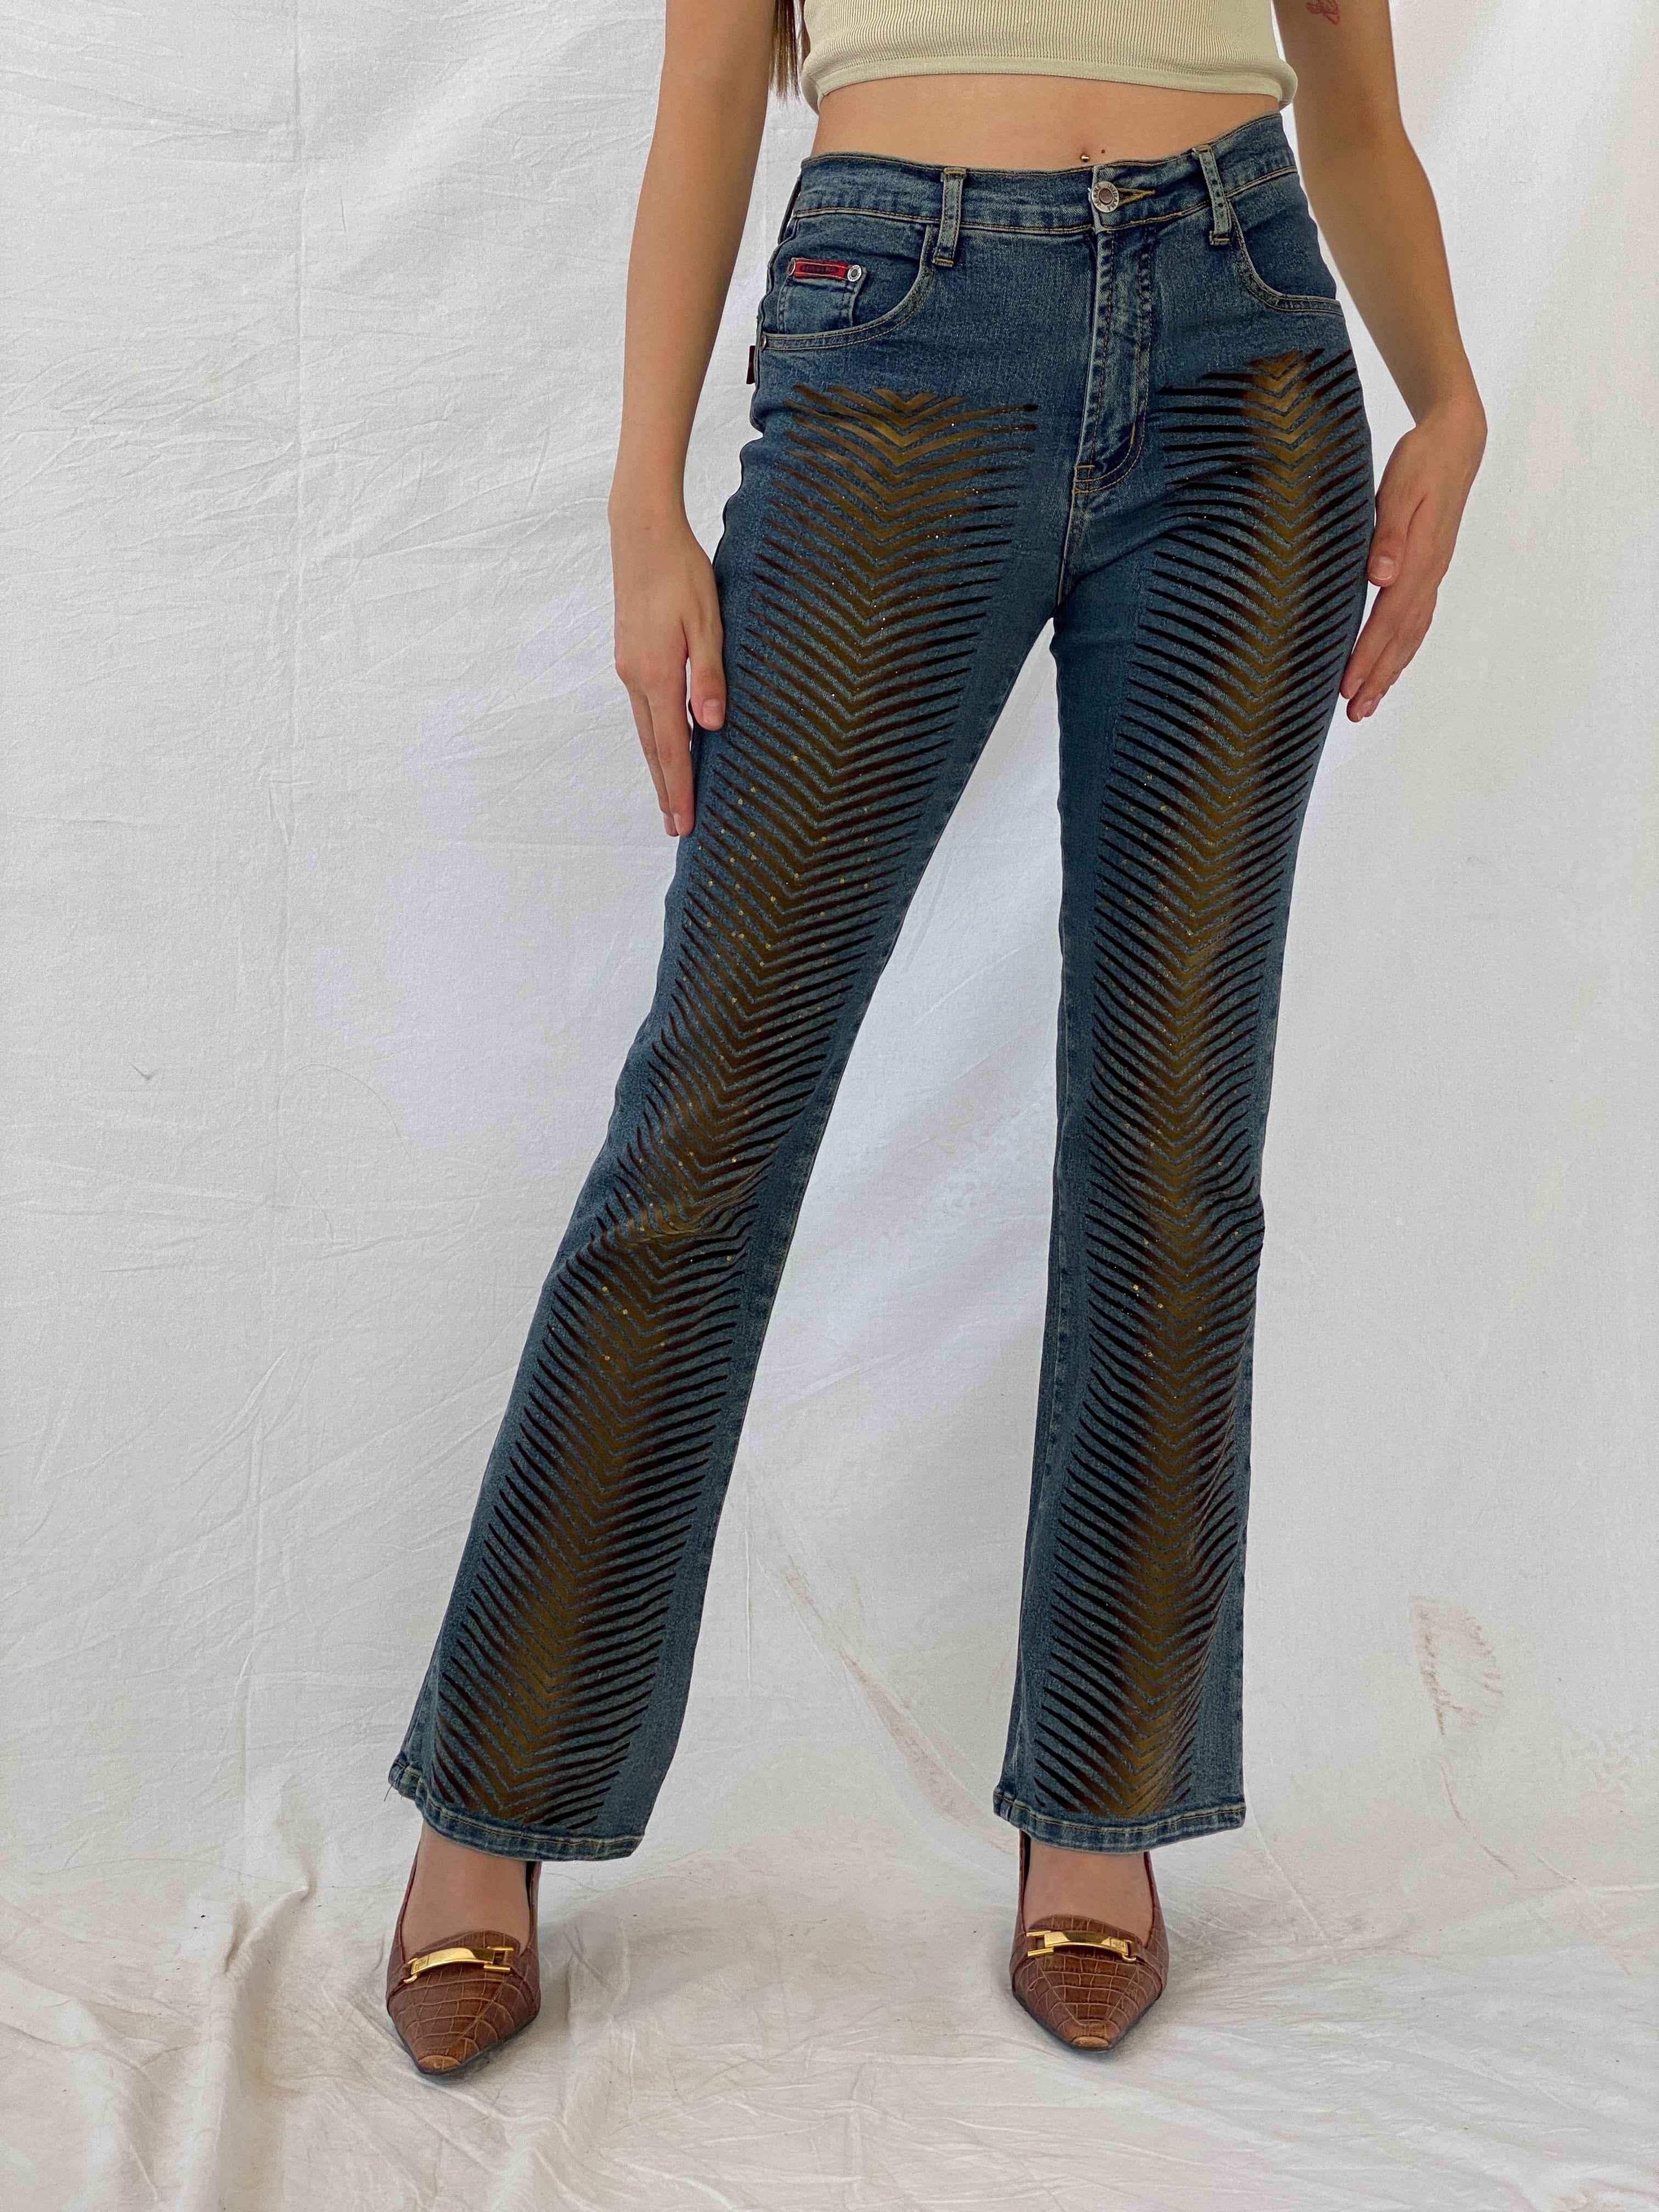 Y2K International Intrama Jeans - Balagan Vintage Jeans 00s, 90s, jeans, Mira, NEW IN